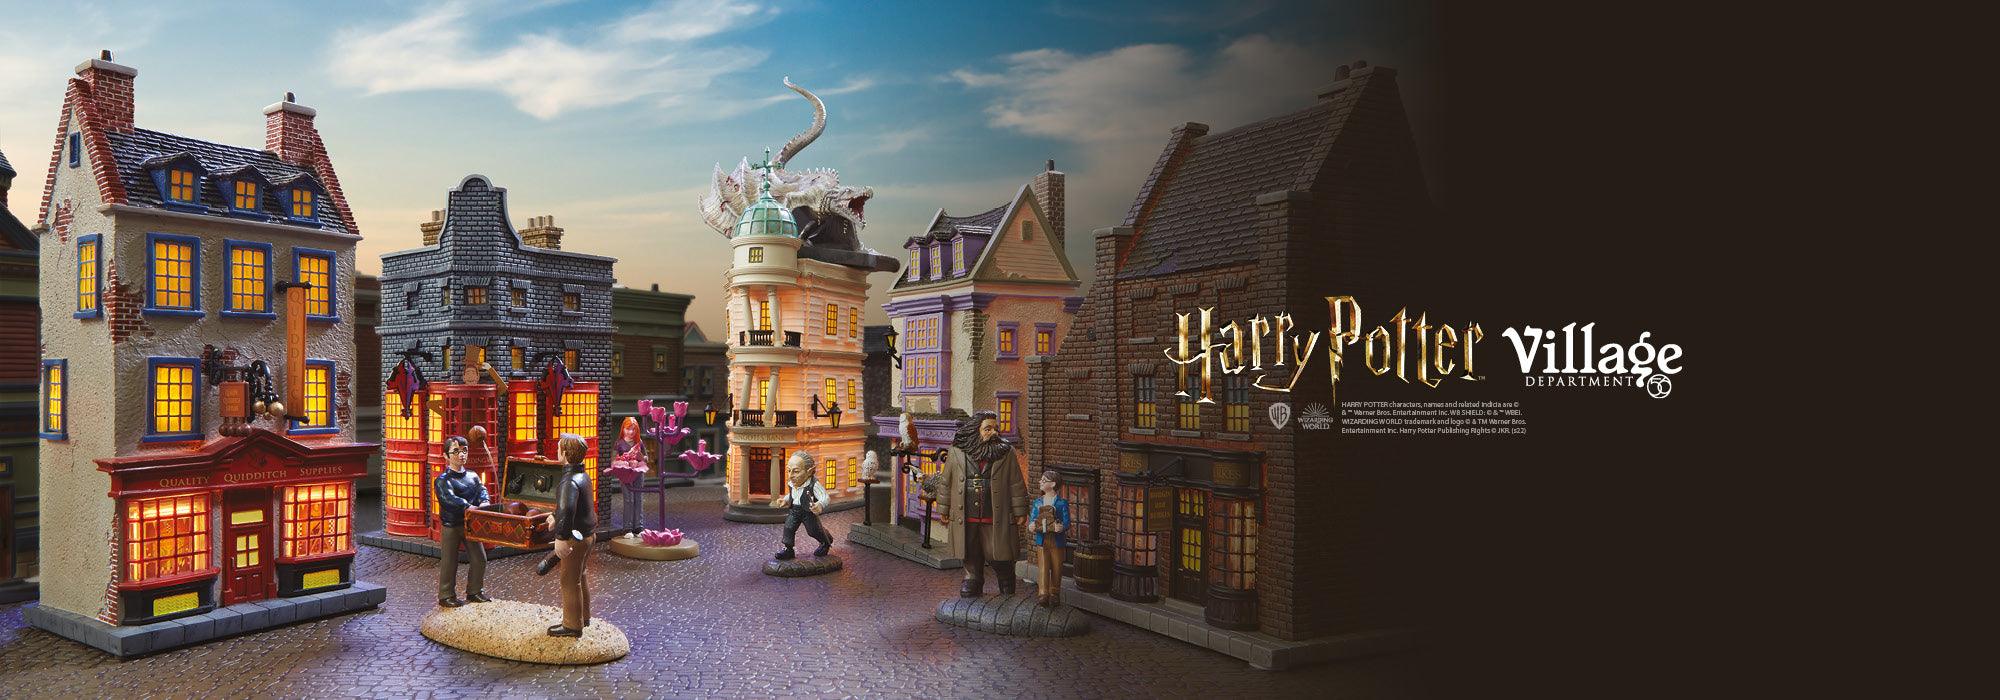 Harry Potter Village The Shrieking Shack Statue